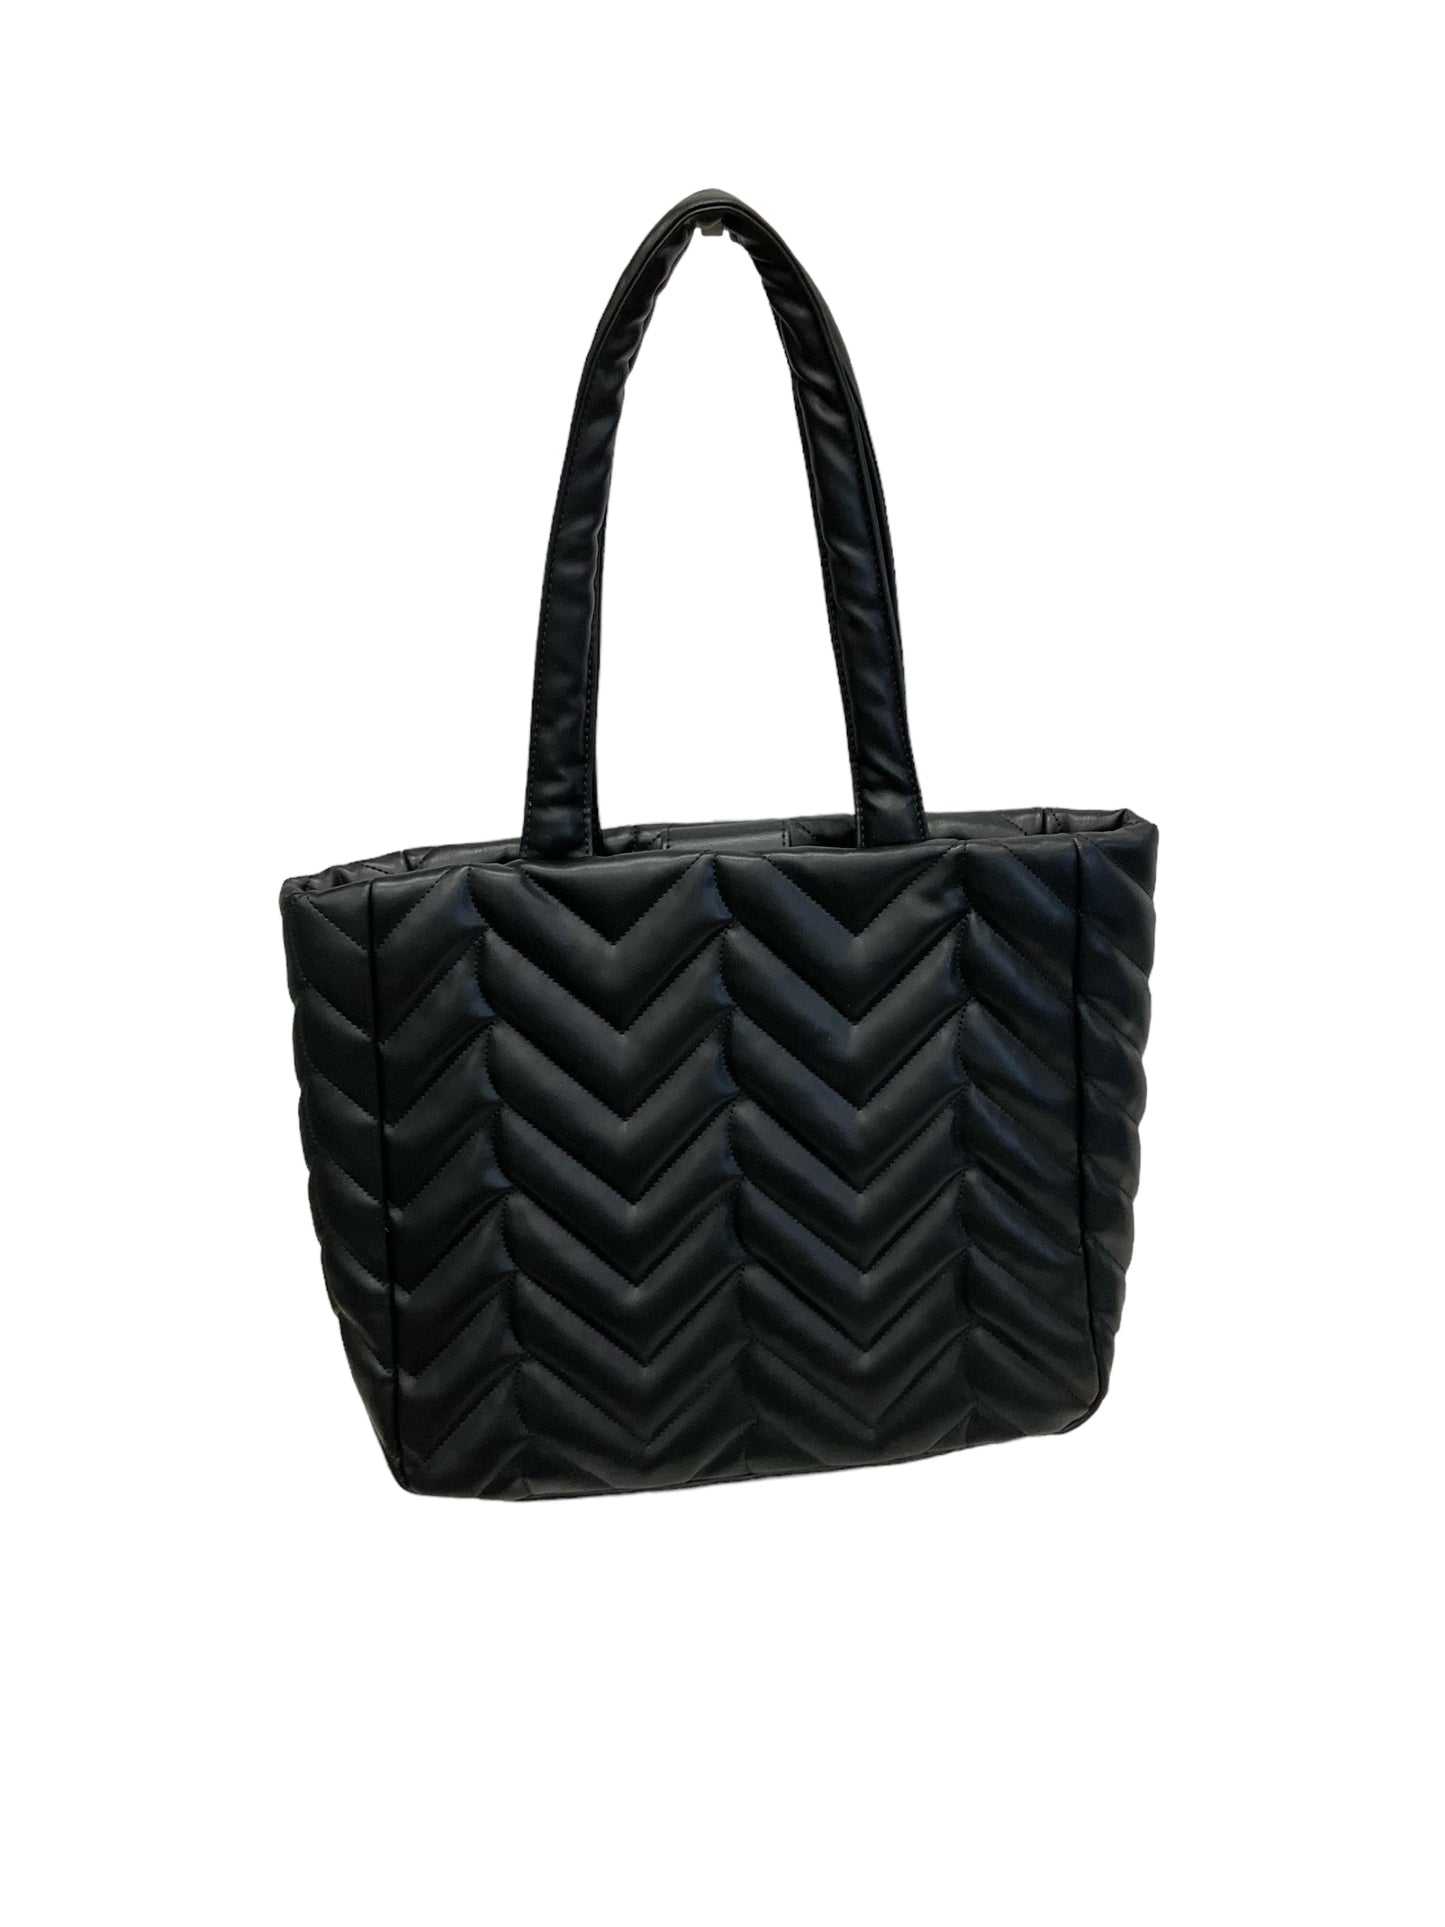 Handbag By Simply Vera  Size: Medium